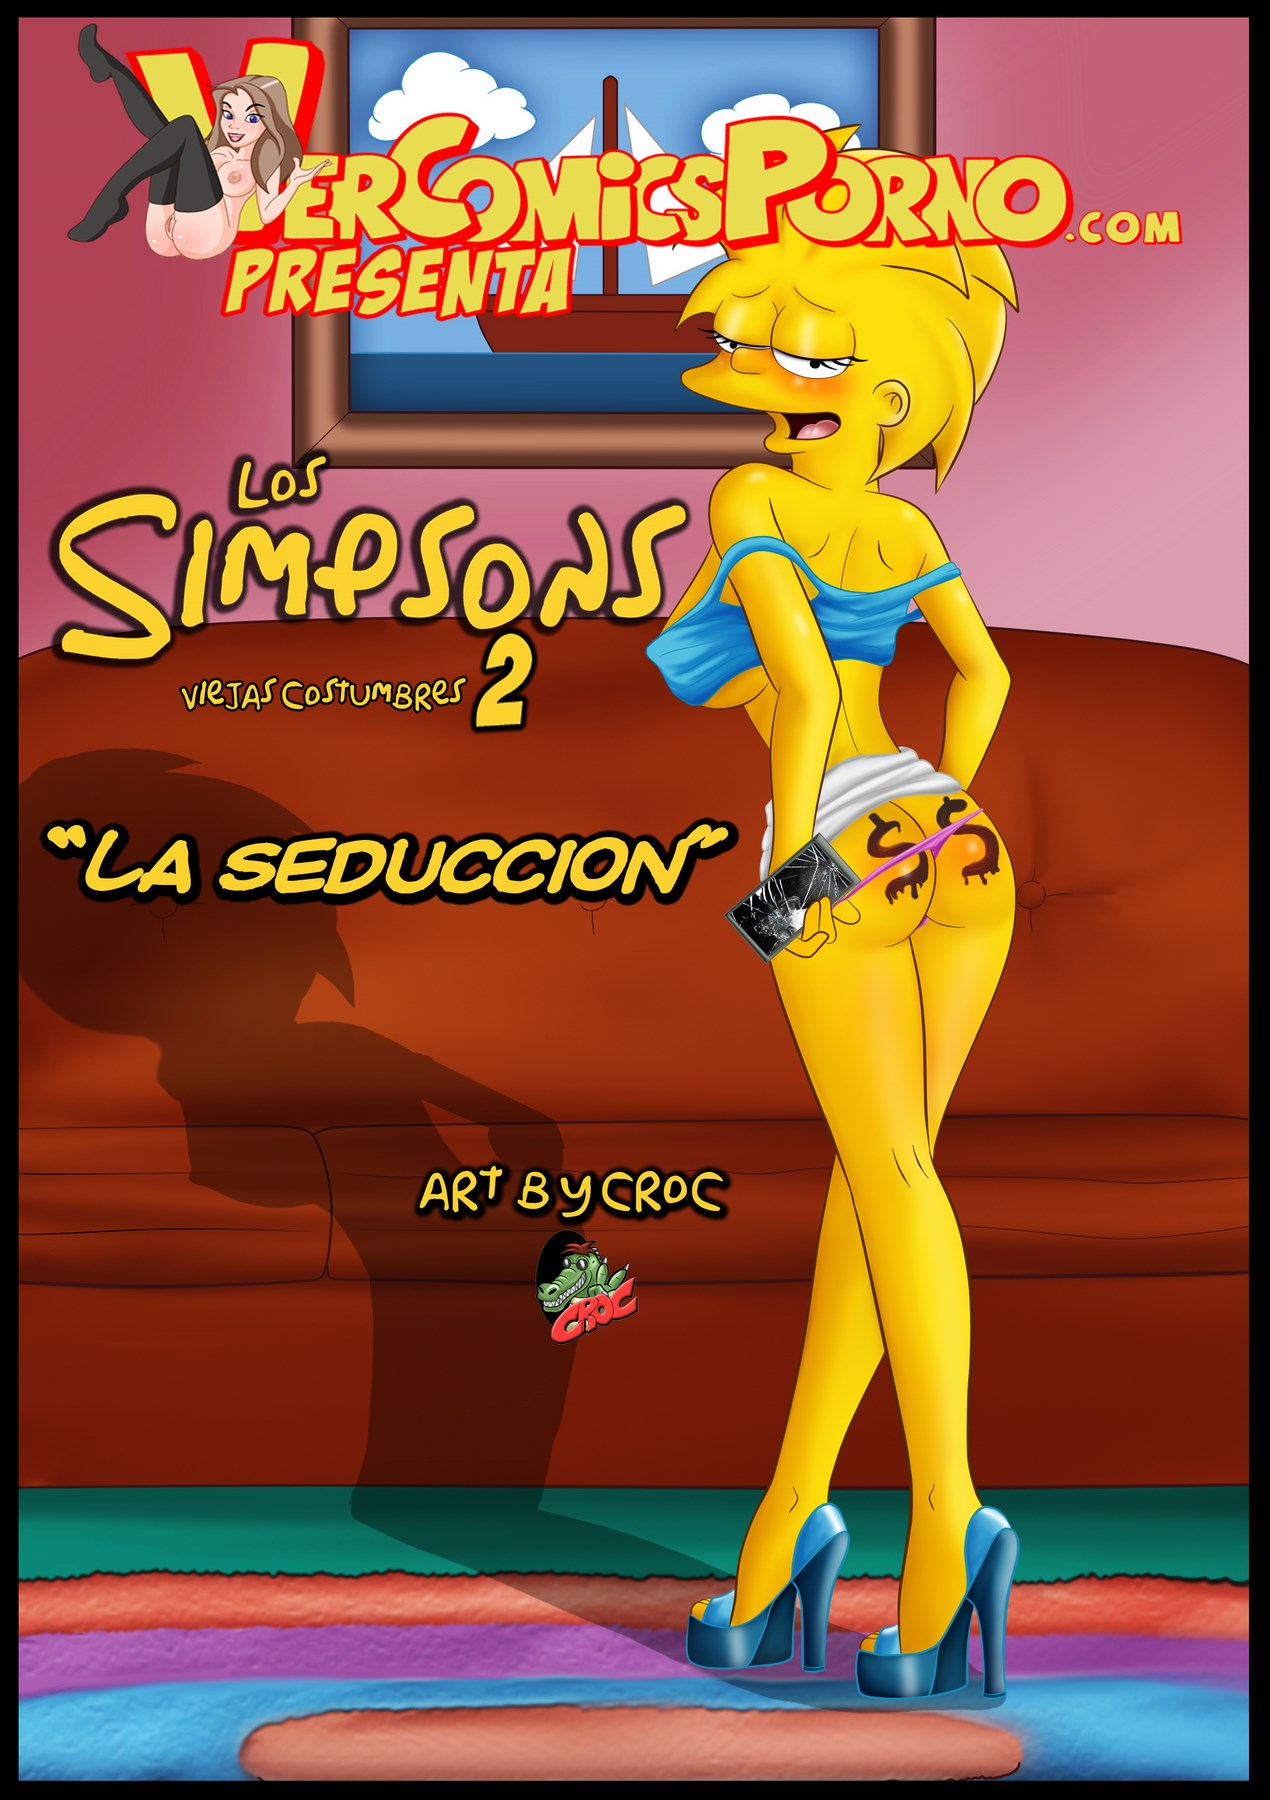 The Simpsons nude comics online